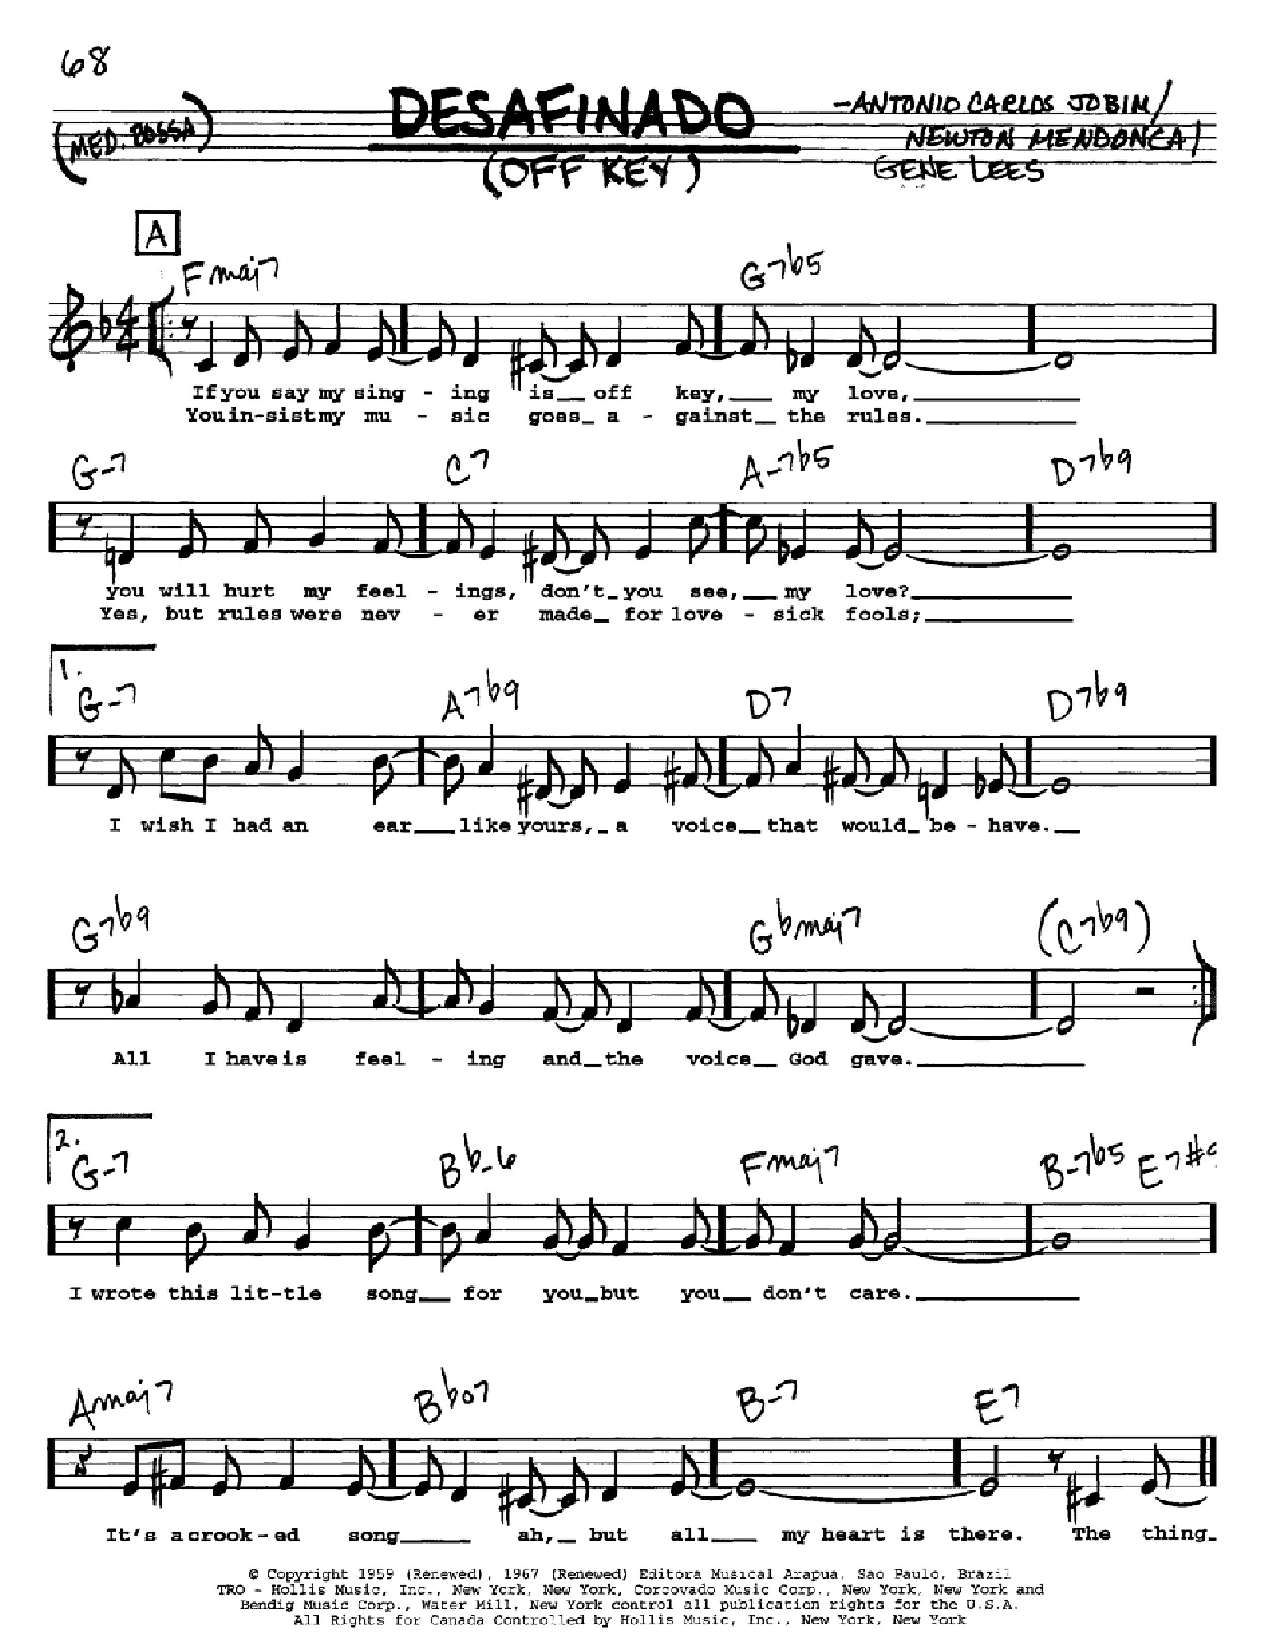 Antonio Carlos Jobim Desafinado (Off Key) Sheet Music Notes & Chords for Easy Guitar Tab - Download or Print PDF